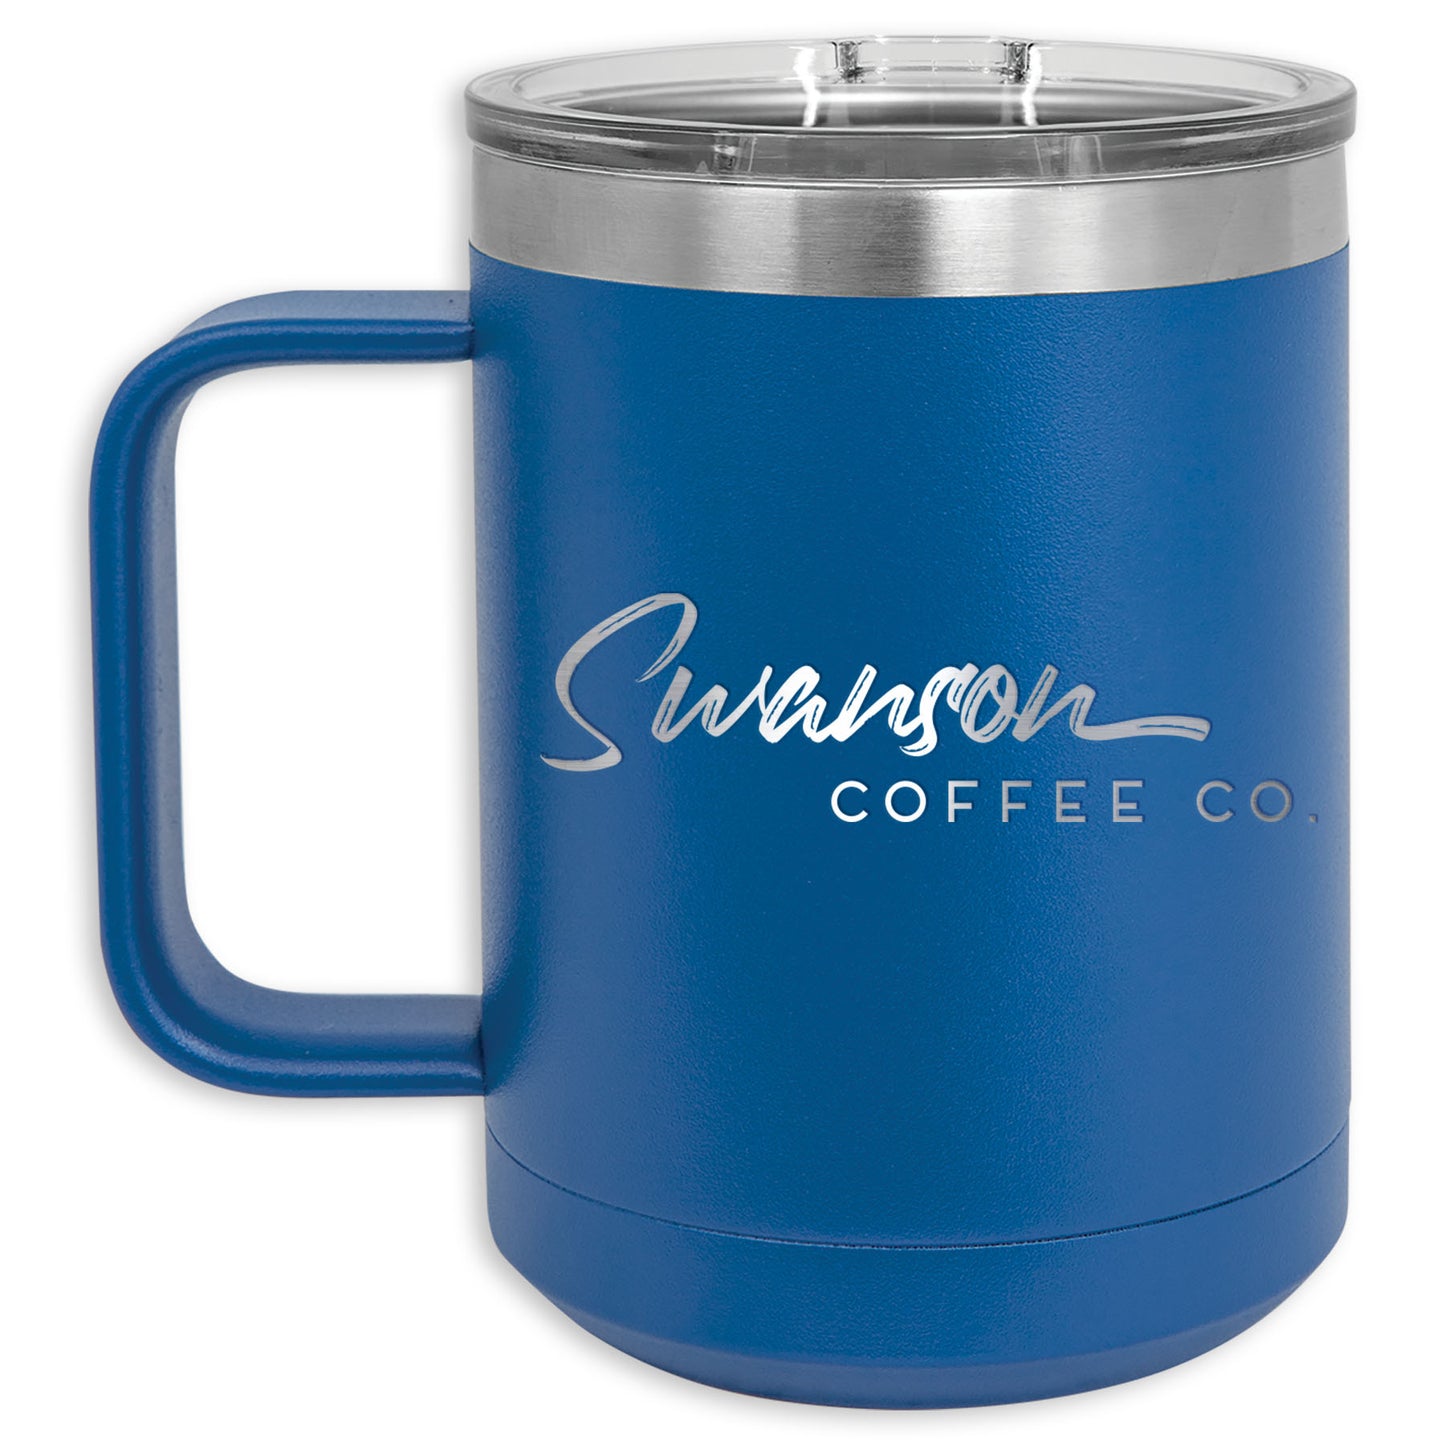 Metal Coffee Mugs | Swanson